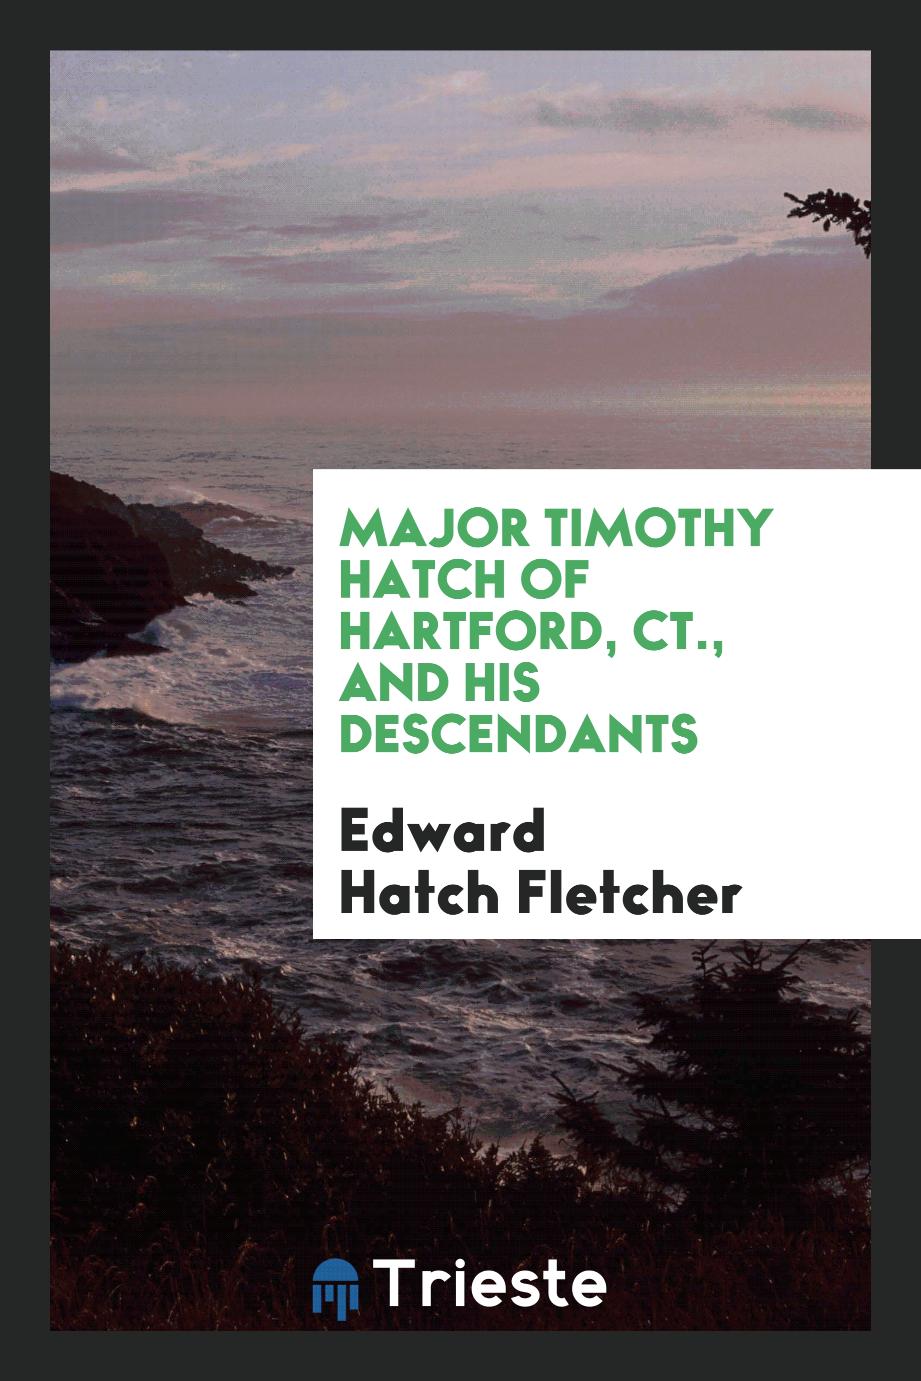 Major Timothy Hatch of Hartford, Ct., and his descendants